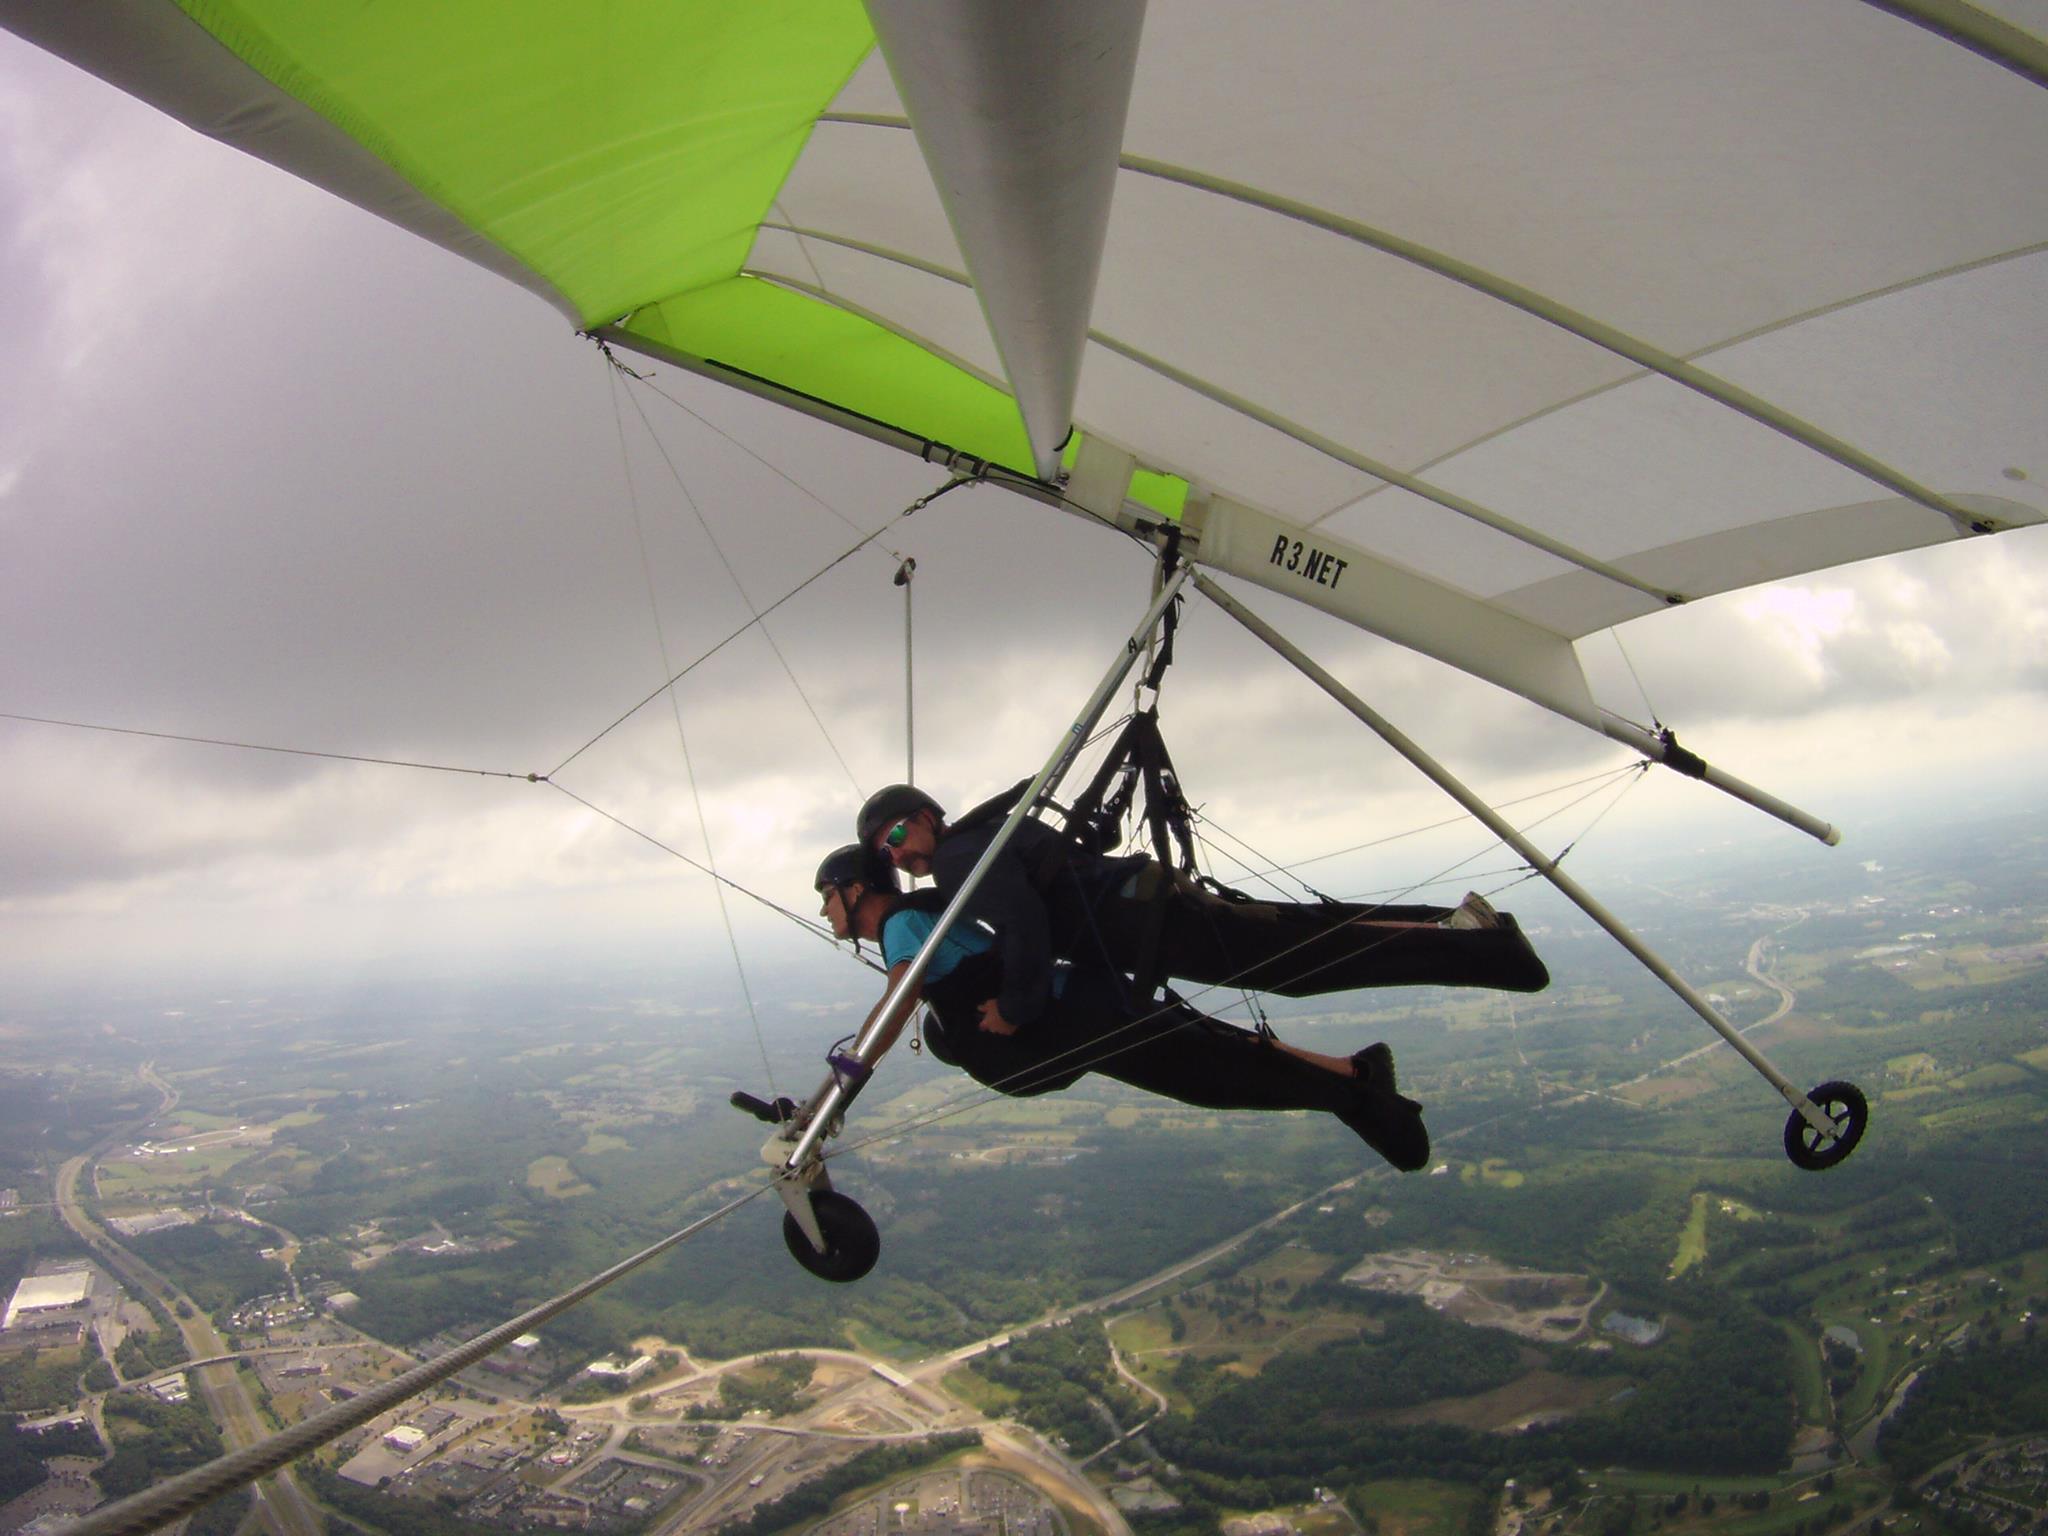 Gallery – Tandem Hang Gliding Flights starting at $229 and up!